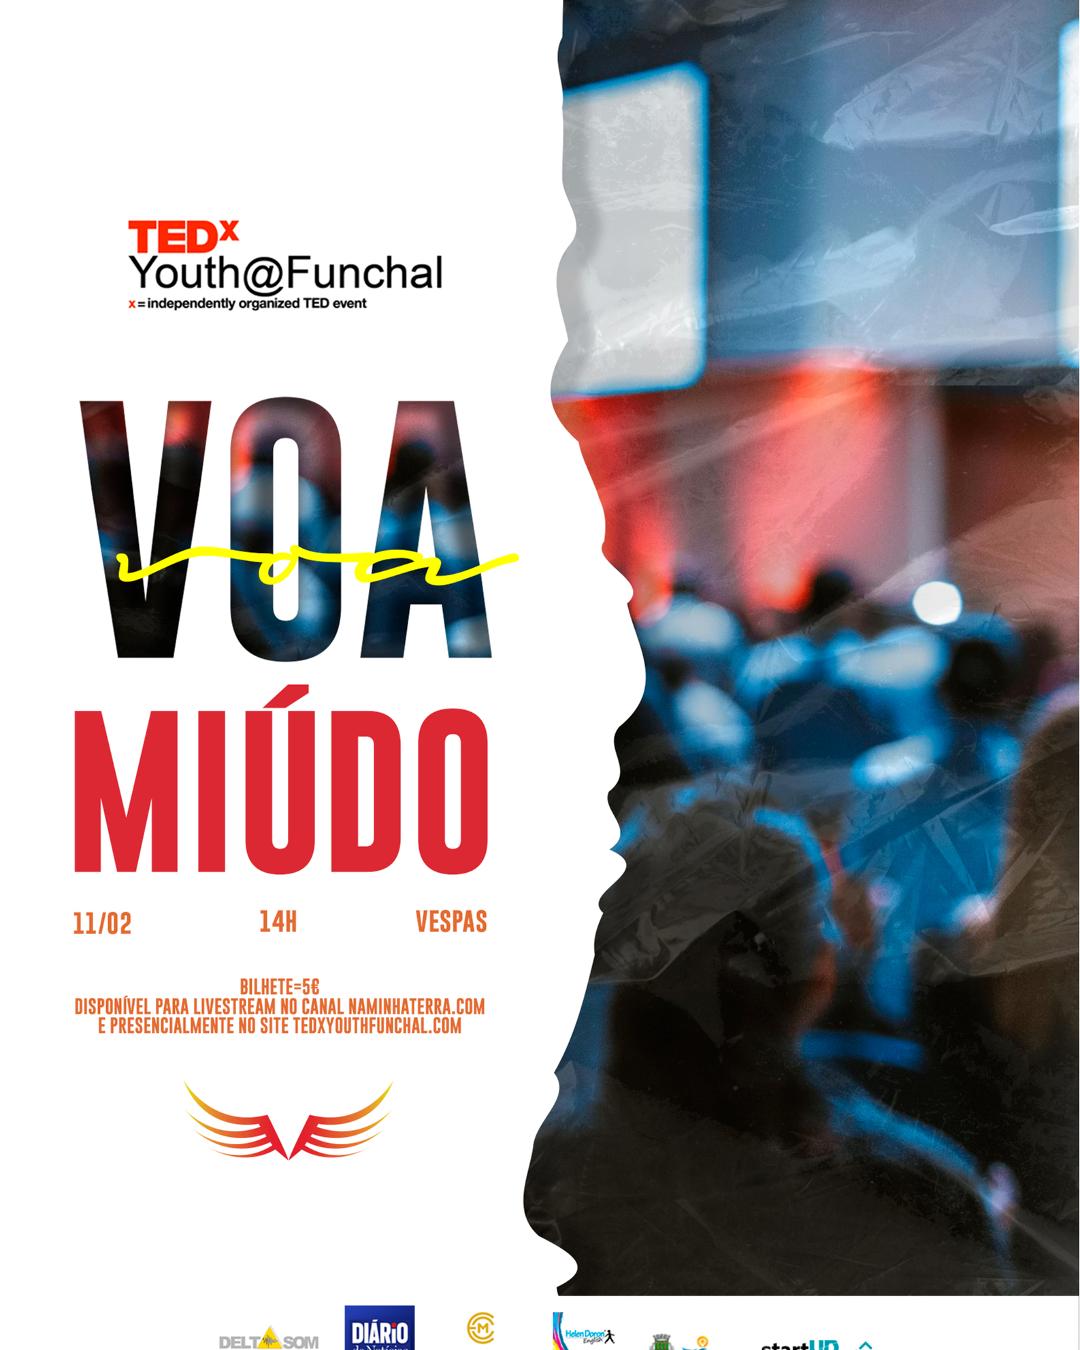 TEDx Youth@Funchal - COMPRA JÁ O TEU BILHETE!